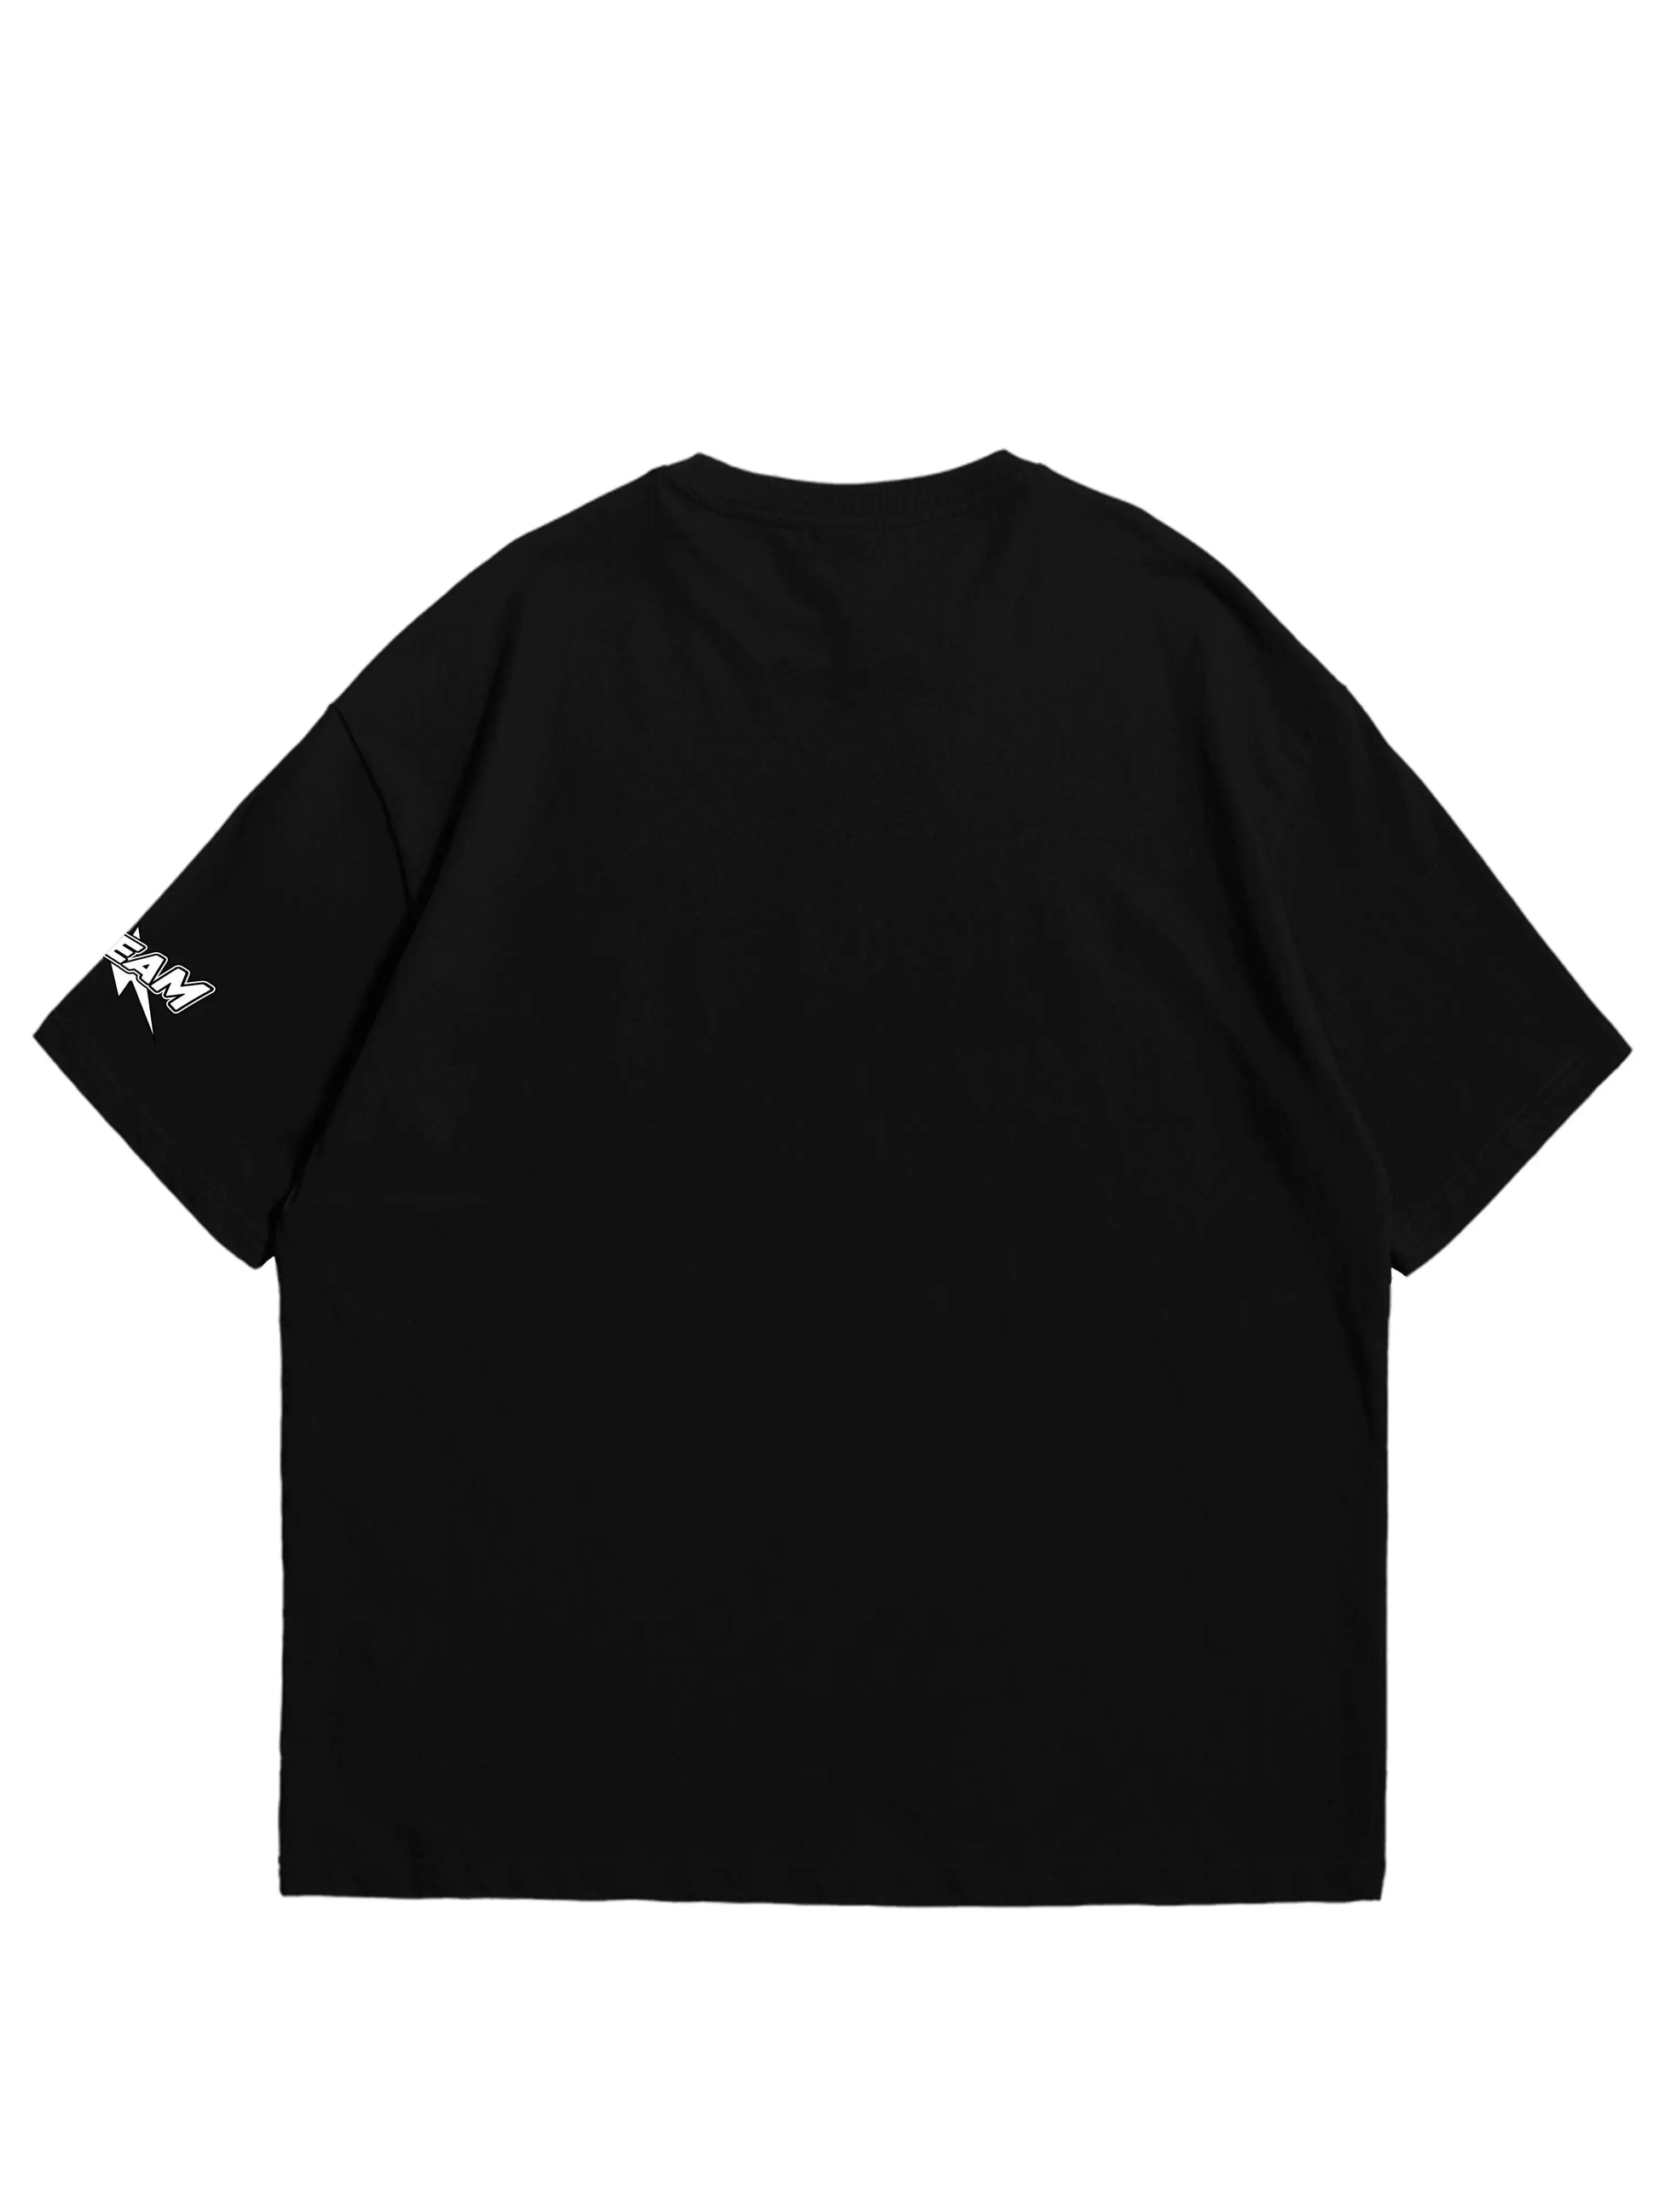 Black oversized T-shirt, Nevermind nirvana rock music band graphic y2k print, skream streetwear t-shirt 